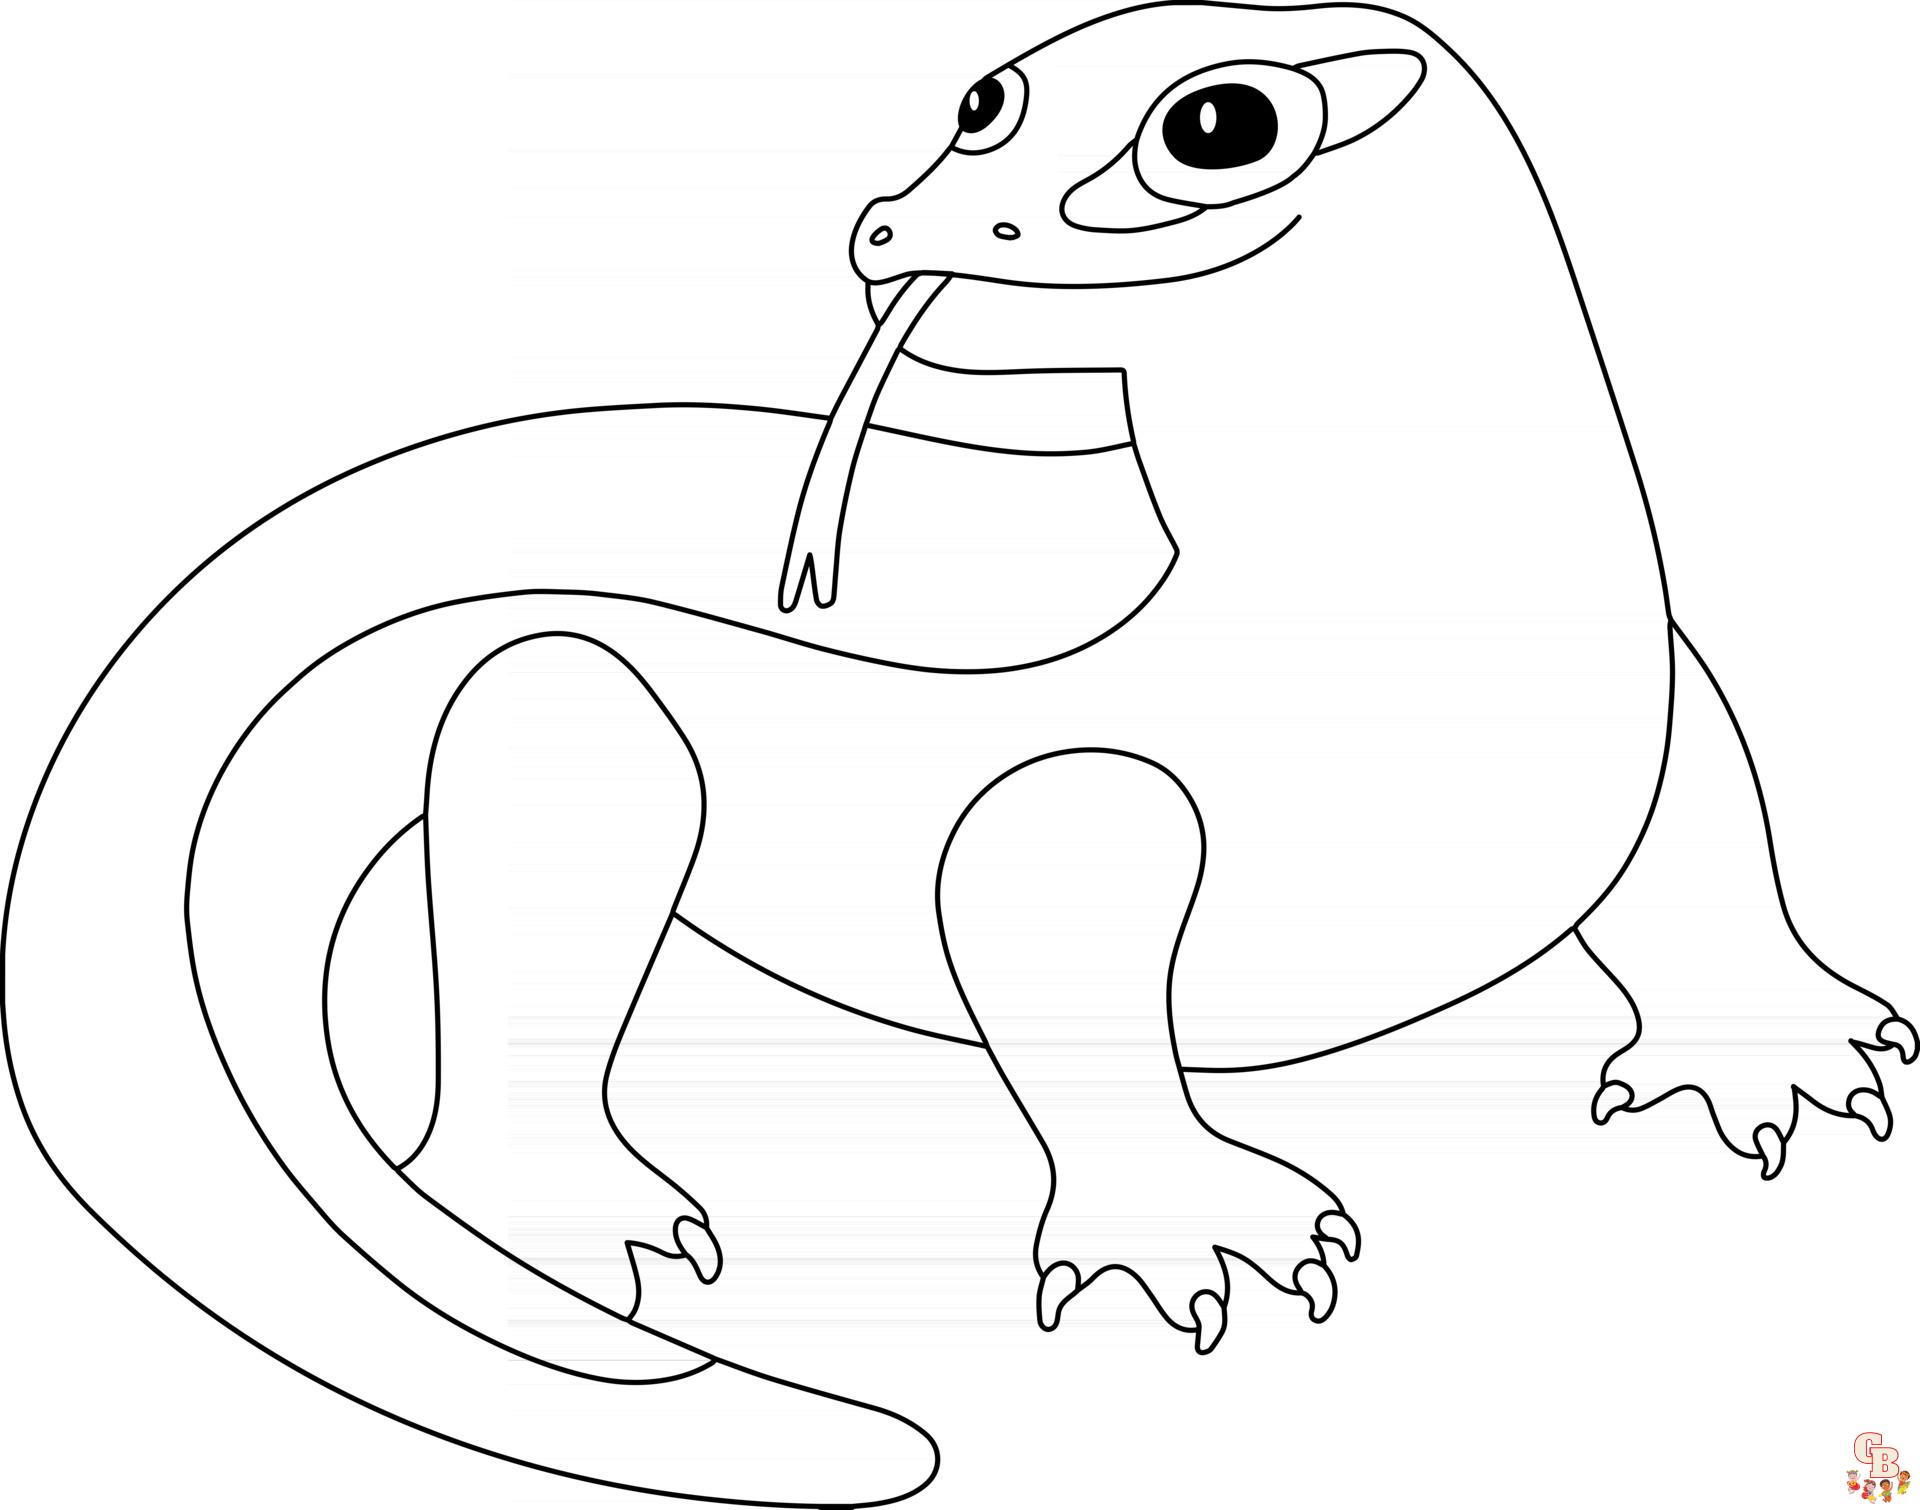 Komodo Dragon Coloring Pages